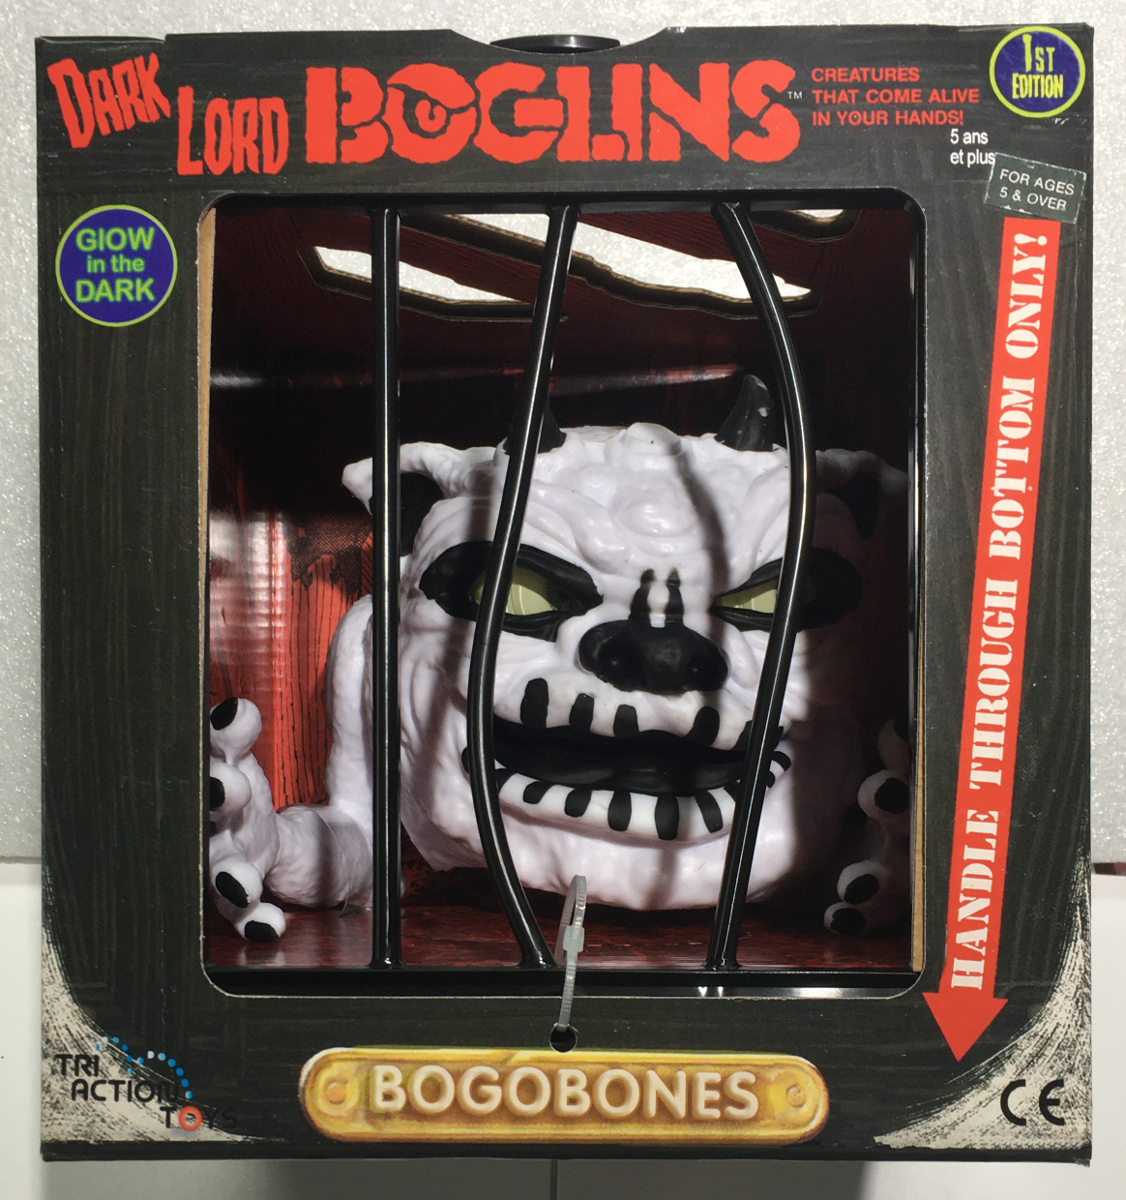 MIB Tri Action Toys First Edition Dark Lords Boglins Bogobones Puppet: Mint in Box 1